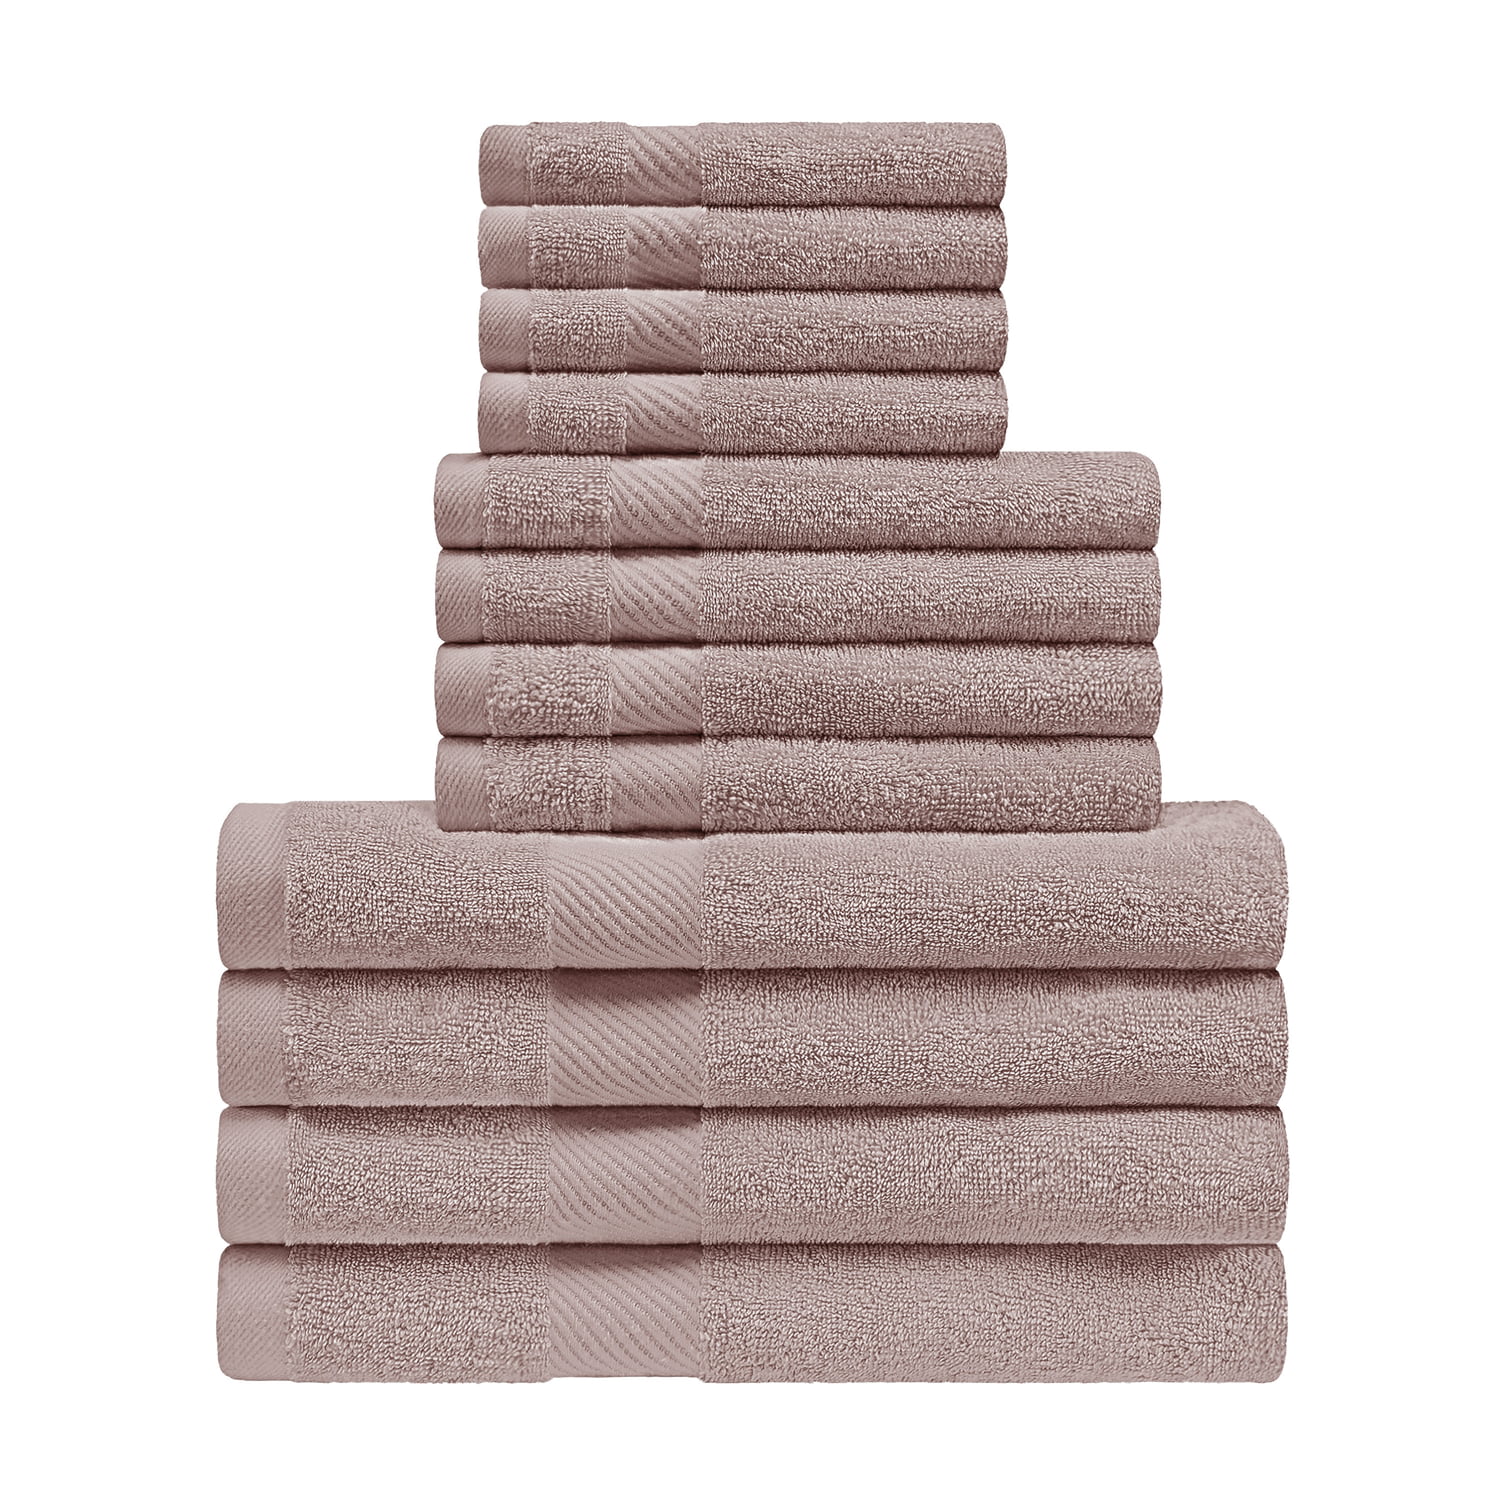 Bath Sheets 100% Egyptian Cotton Super Soft & Absorbent Hampton Luxury Towels 